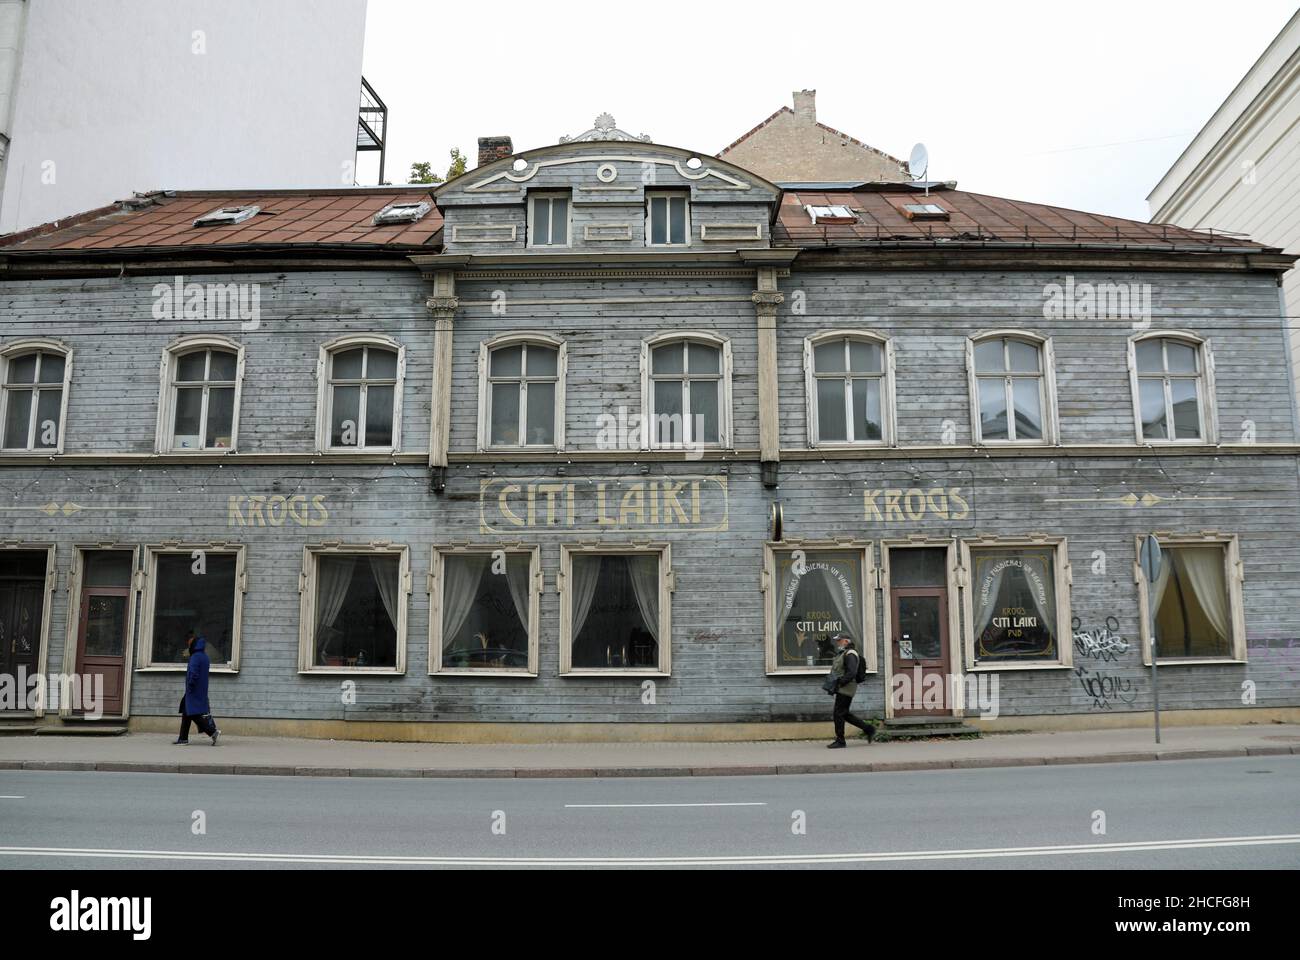 Citi Laiki pub in a traditional Latvian wooden building in Riga Stock Photo